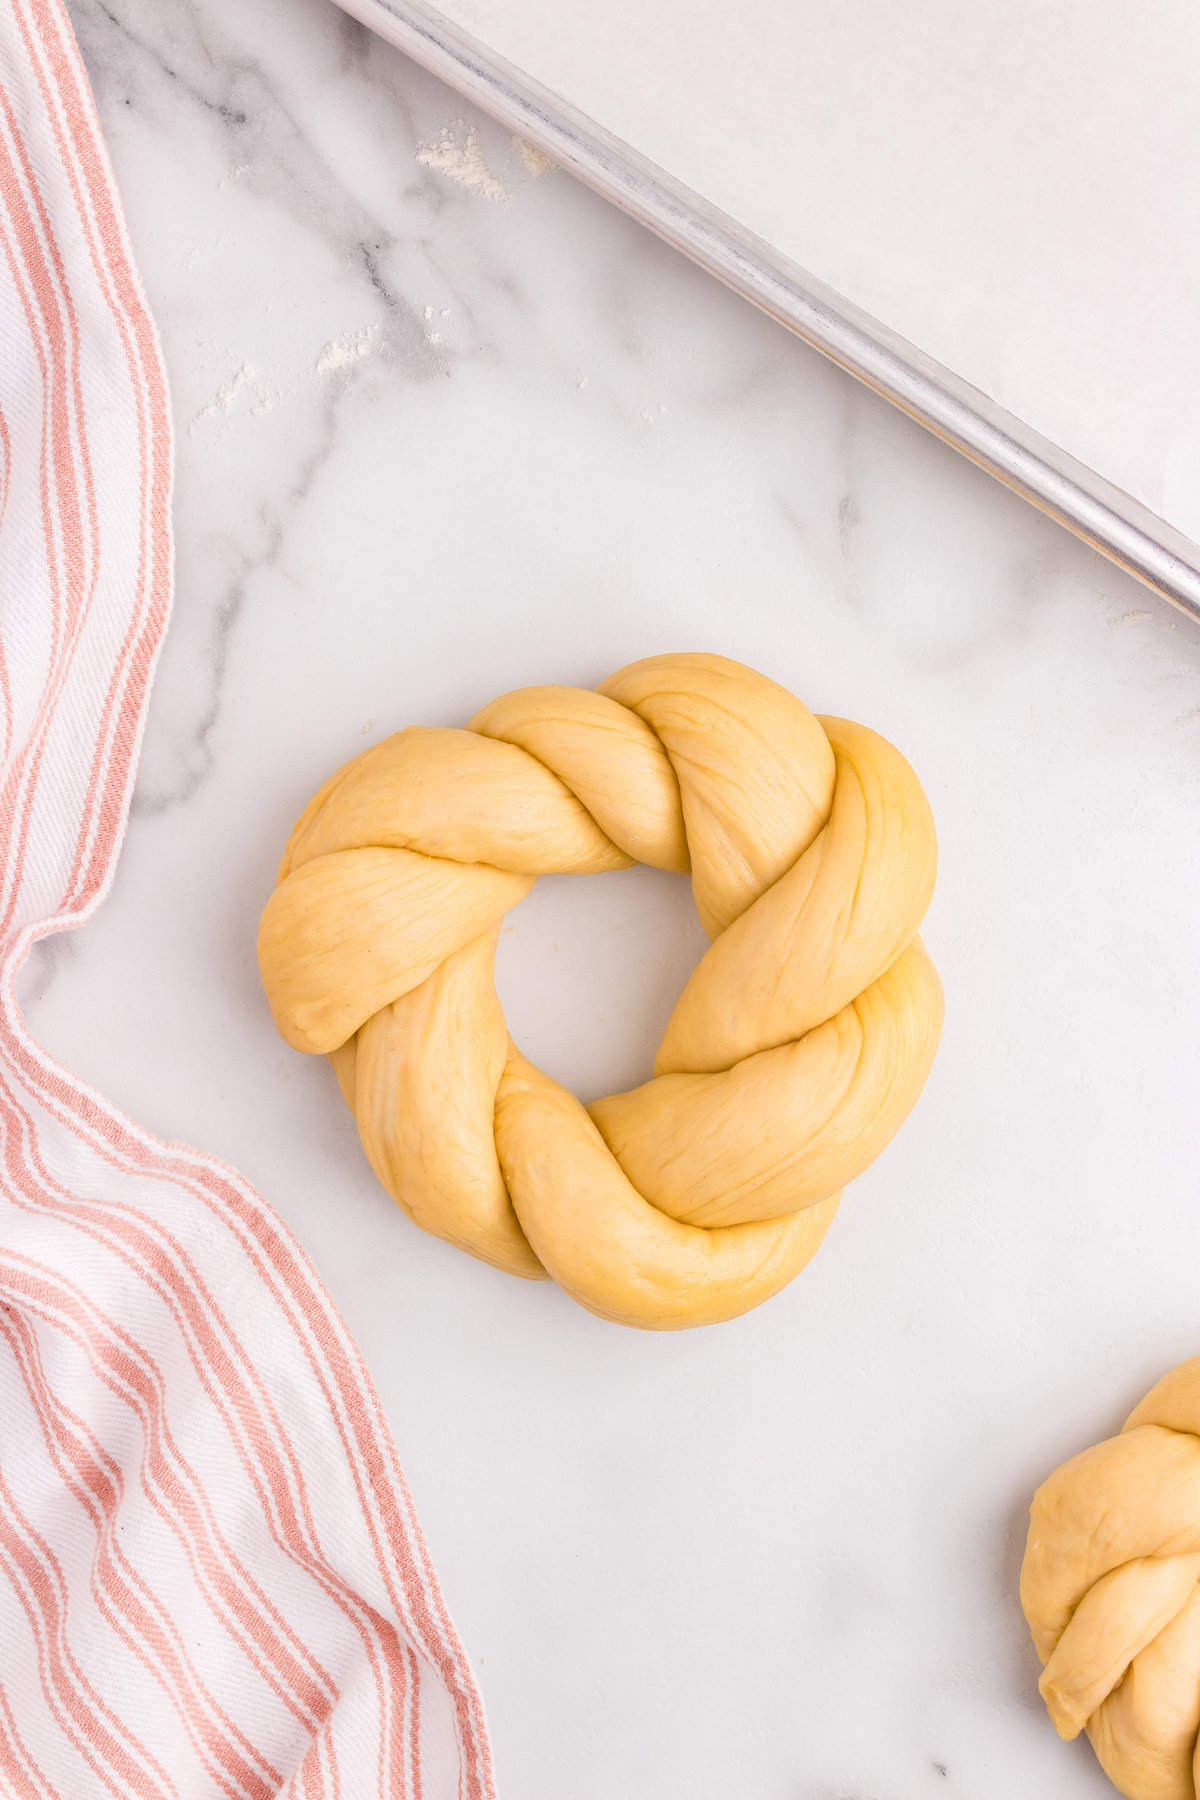 Twisting Easter Bread dough into wreath shape